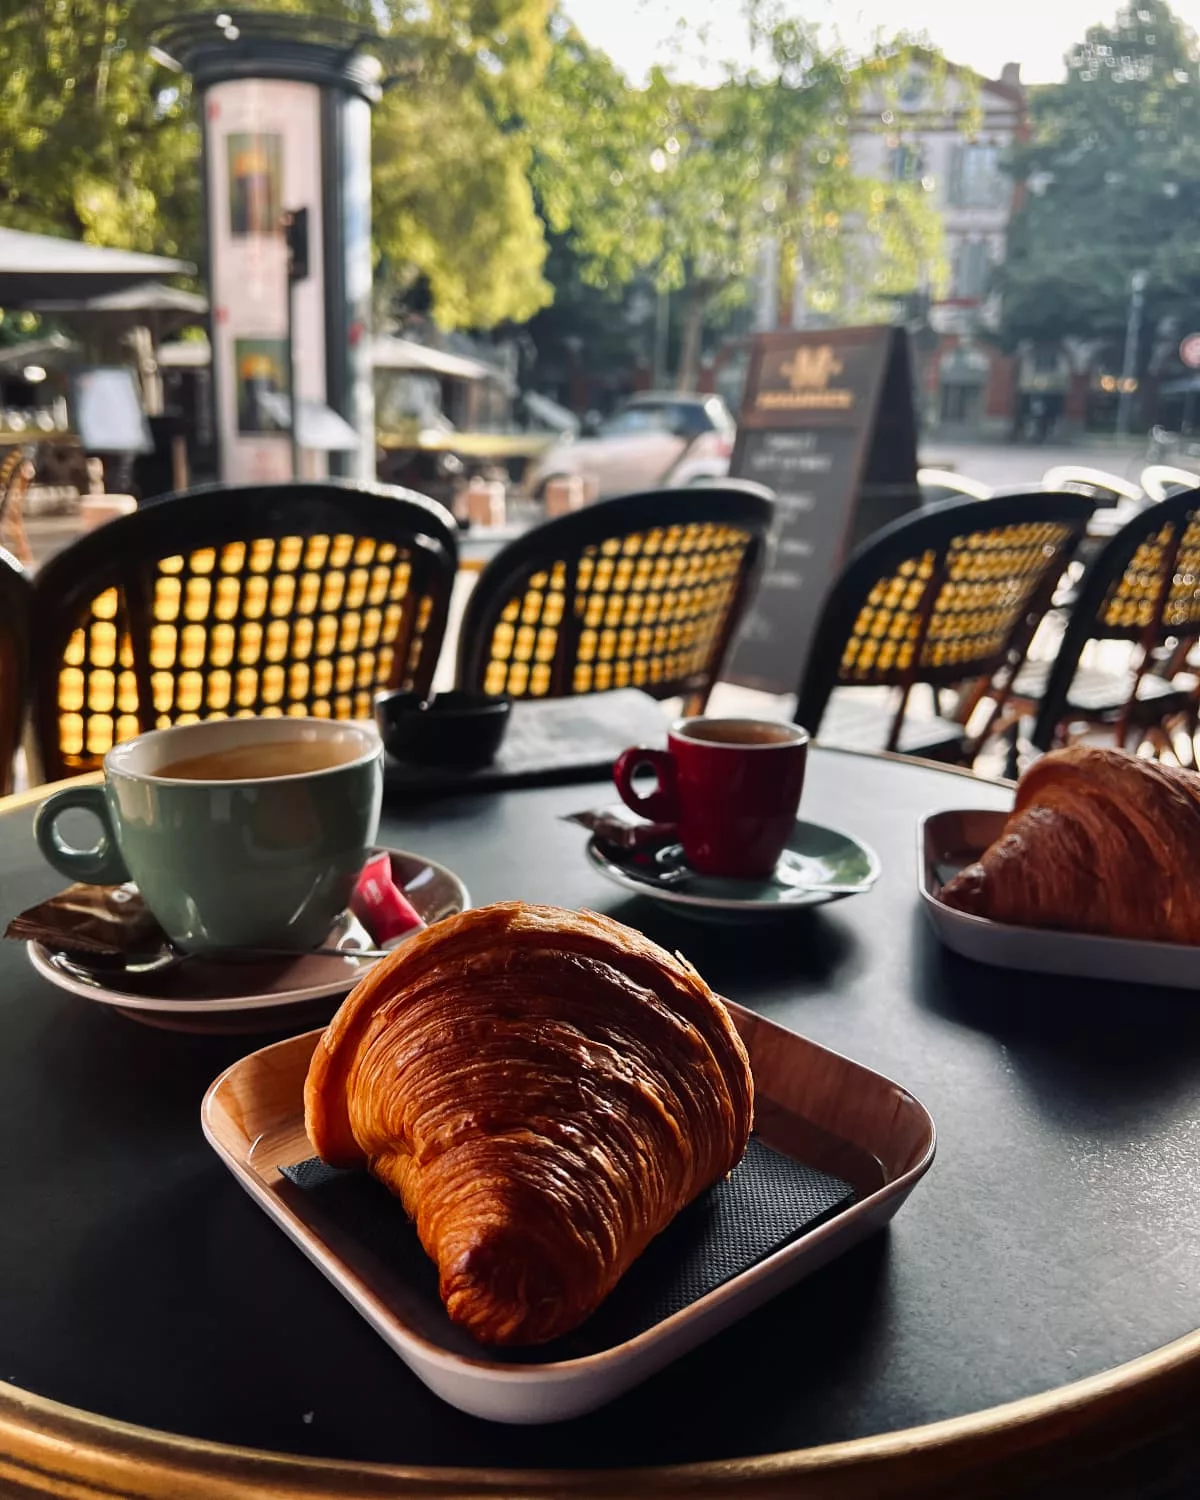 A croissant and coffee on a café table